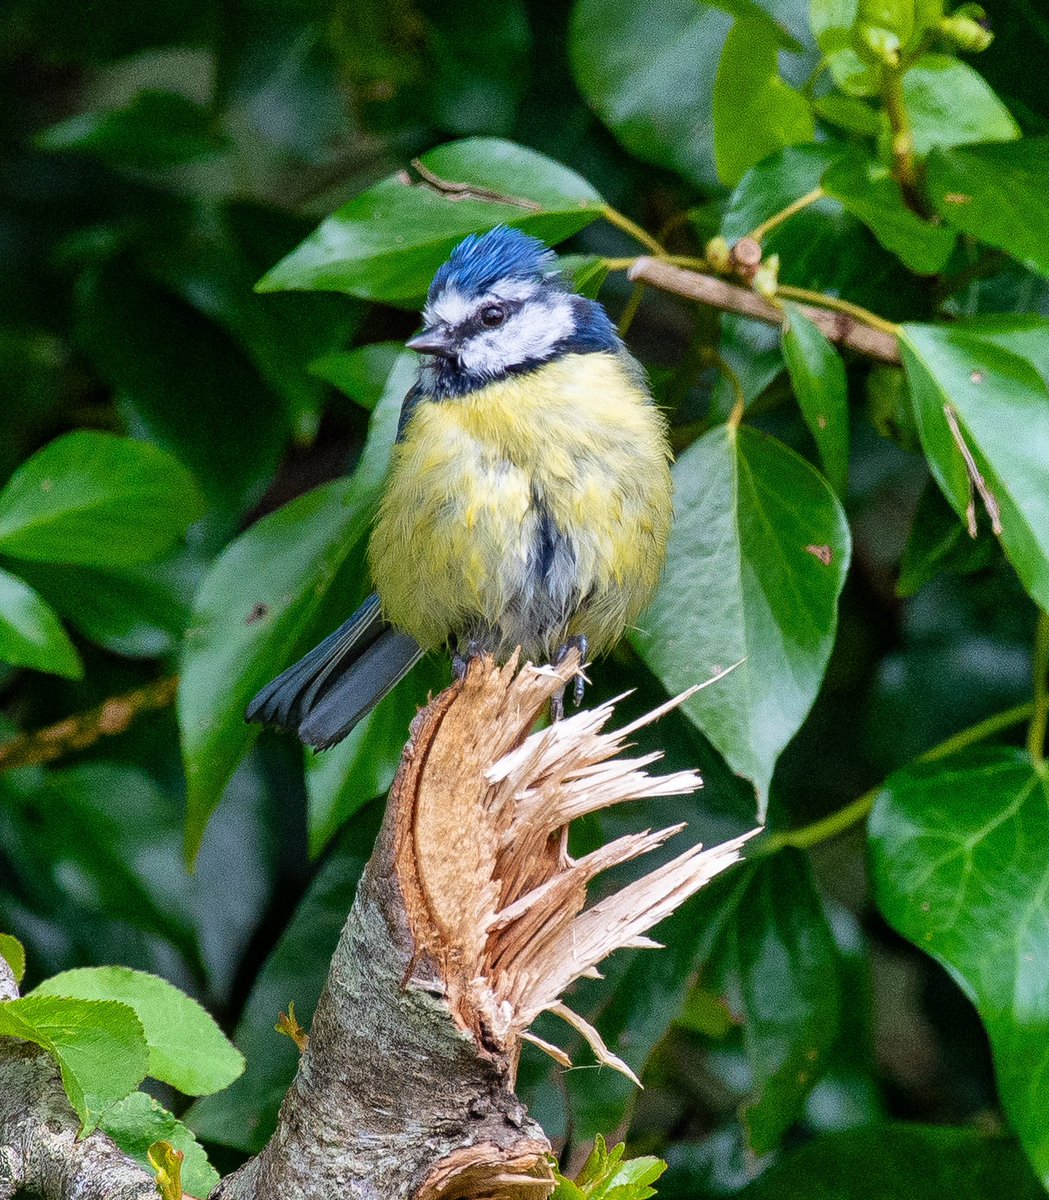 Blue tit on a branch.
#bluetit #bird #wildbird #photography #nikon #nikor